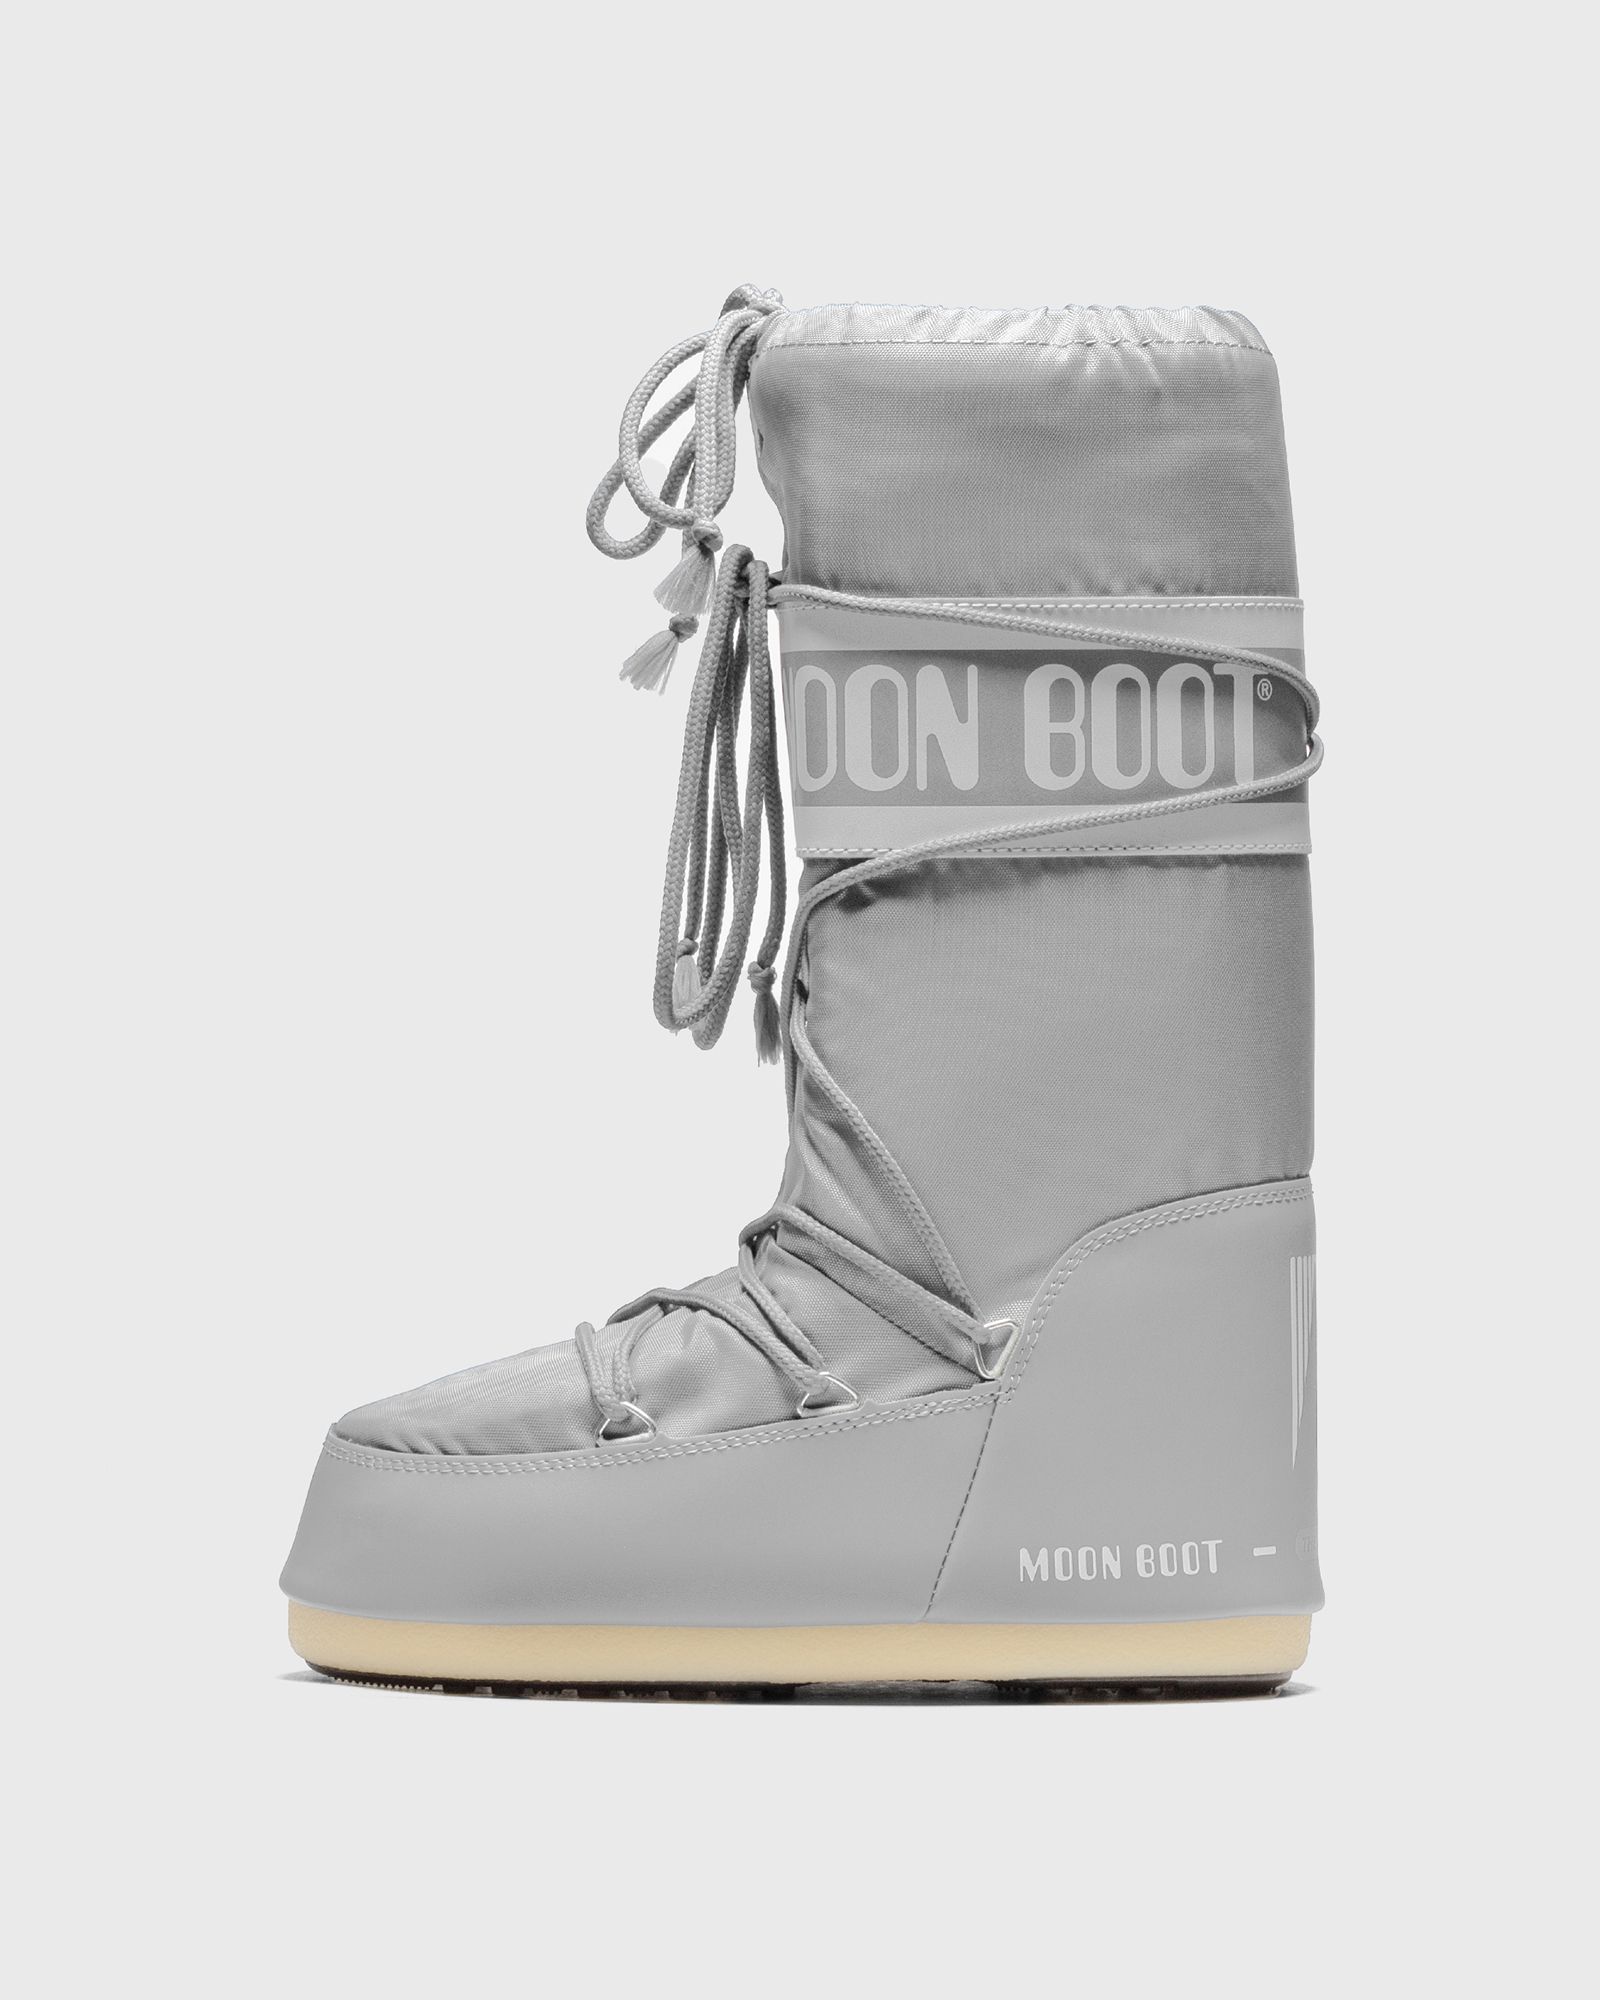 Moon Boot - icon nylon men boots grey in größe:39-41